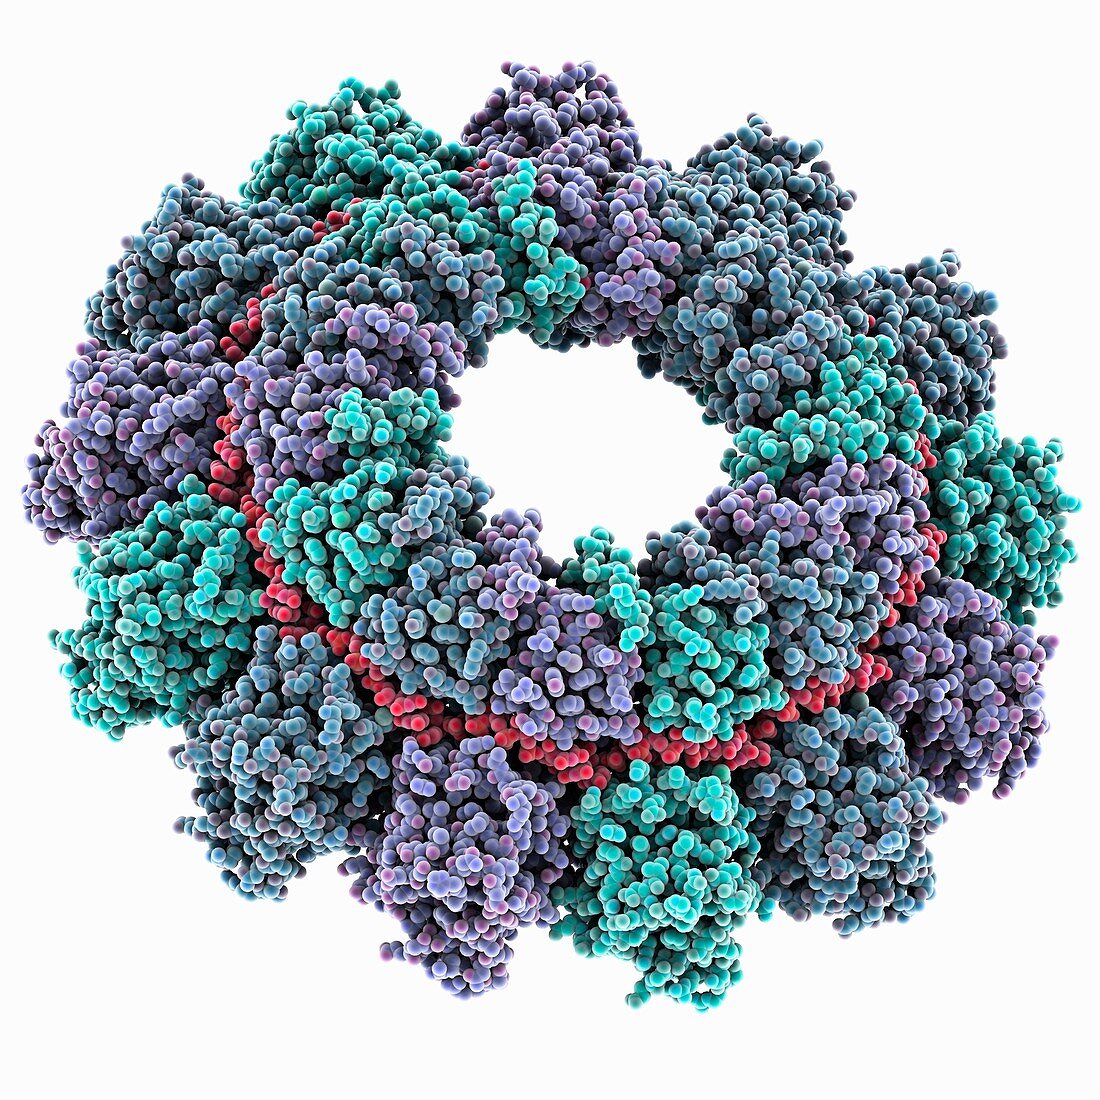 Parainfluenza virus 5 nucleoprotein